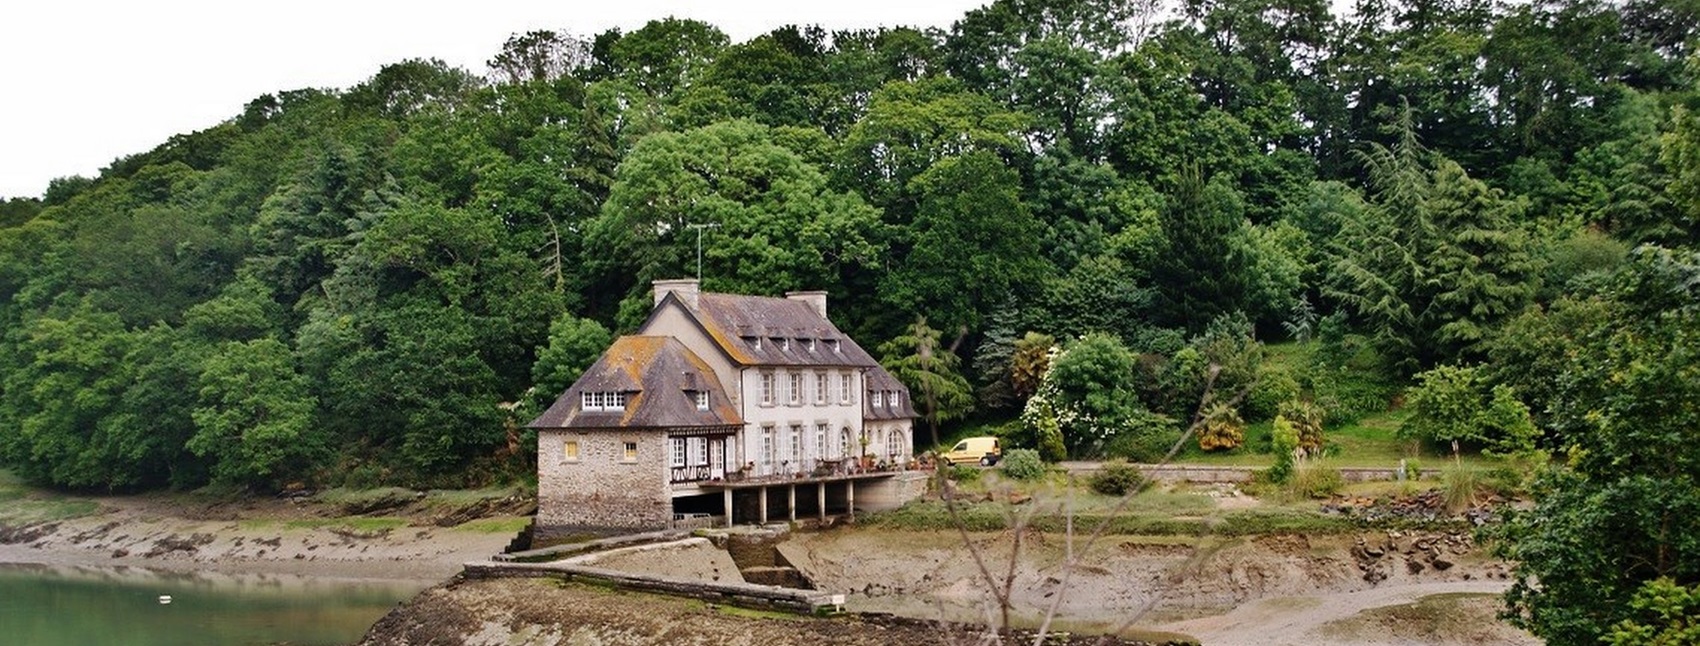 GR®34C From Neal pond (Cotes-d'Armor) to Dinard (Ille-et-Vilaine)